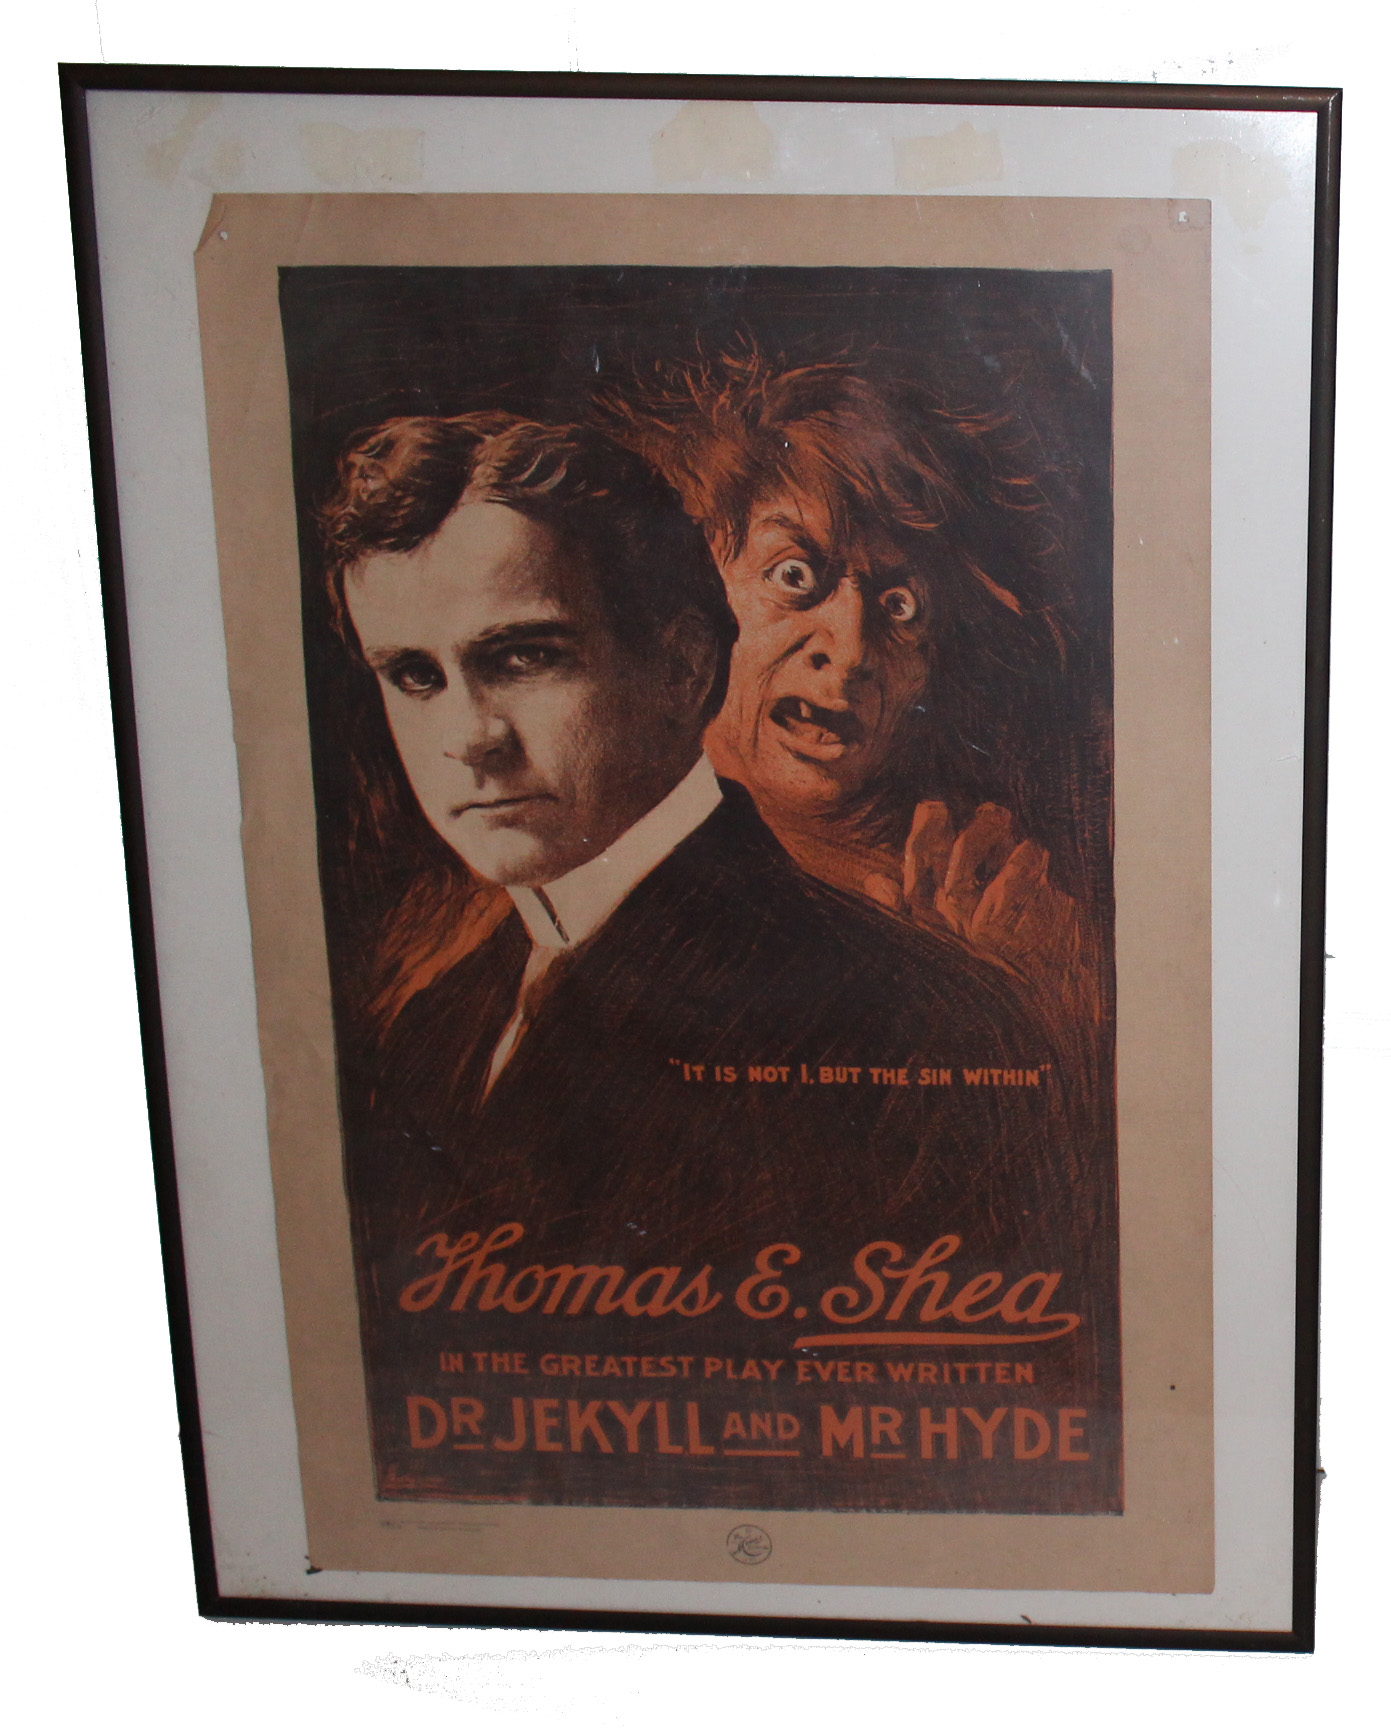 https://0201.nccdn.net/1_2/000/000/0d3/5cb/dr.-jekyll-and-mr.-hyde-thomas-e.-shea-theatrical-litho-poster.jpg